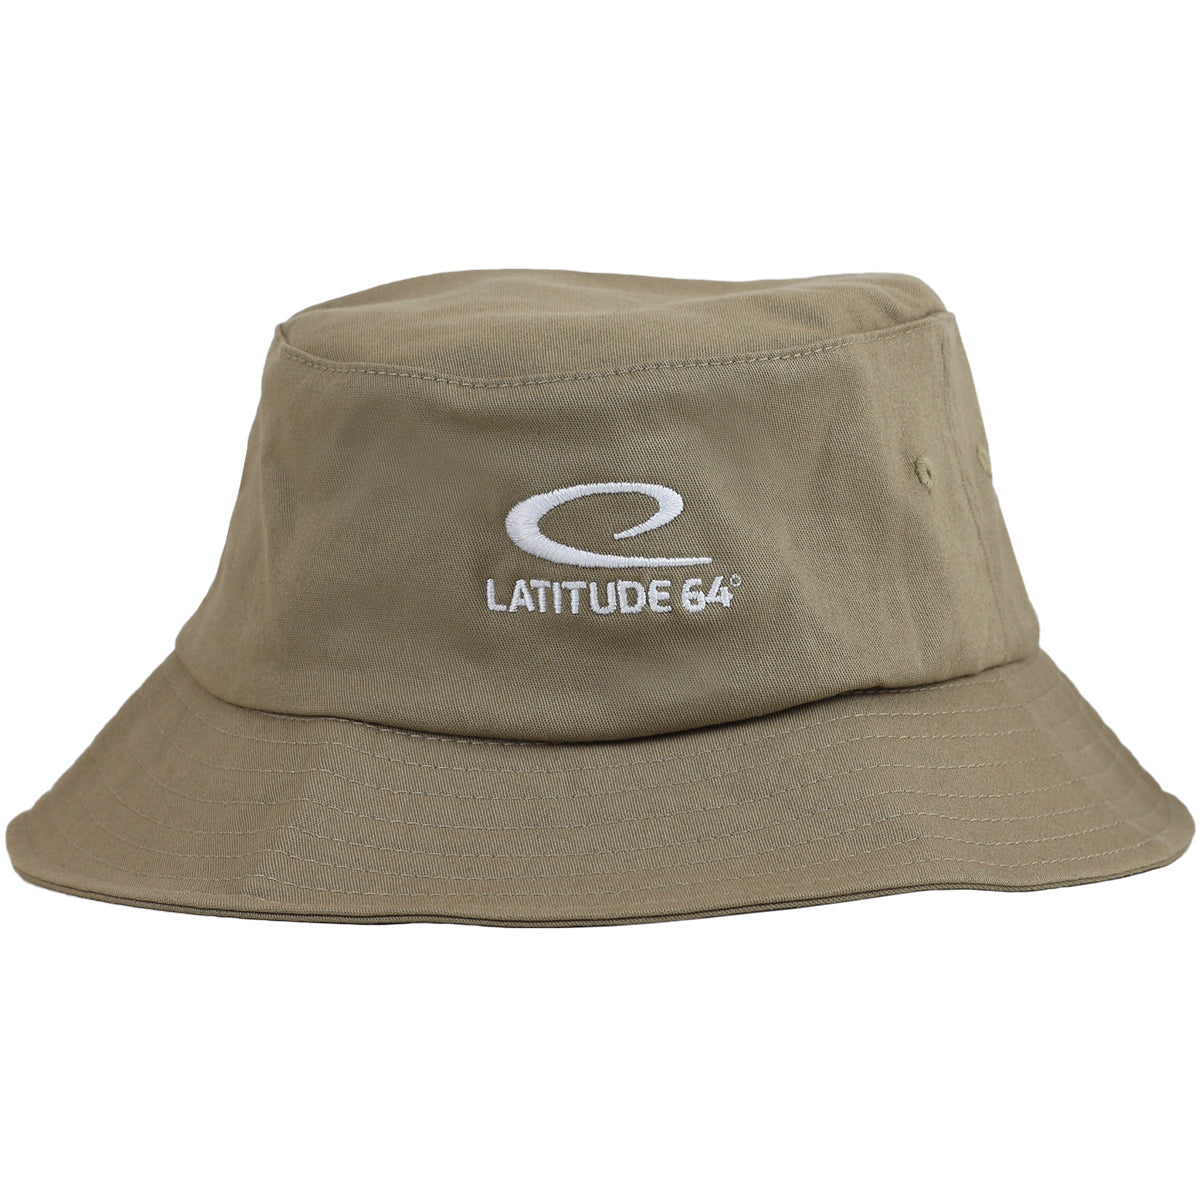 Flexfit® Bucket Hat – Latitude Factory Store 64°